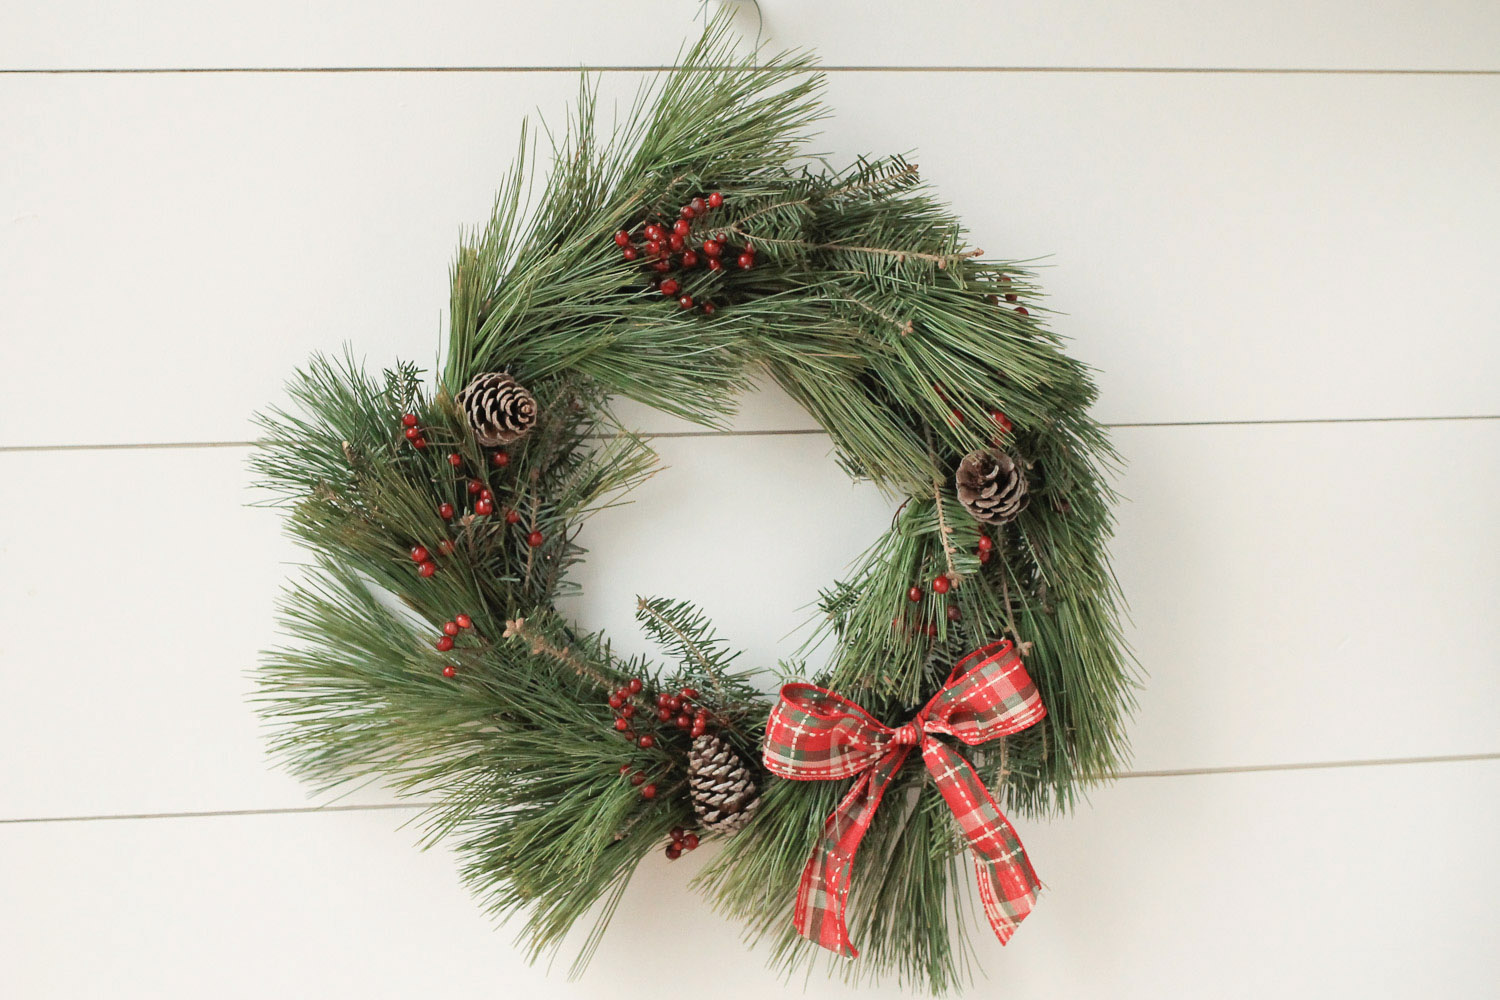 DIY rustic Christmas Wreath tutorial